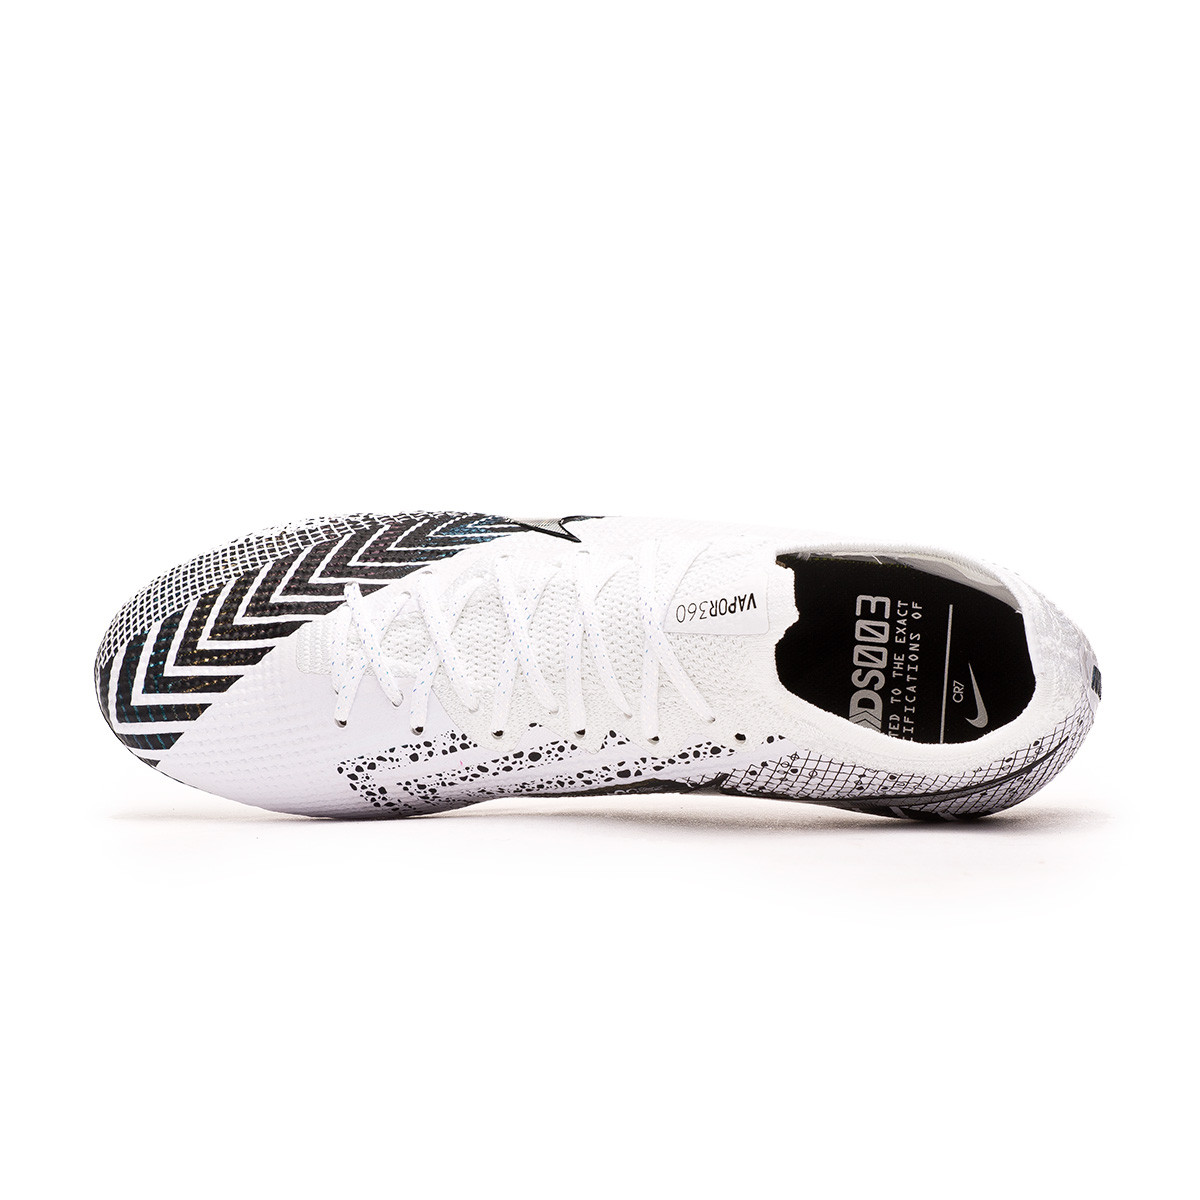 Nike Mercurial Vapor XIII Elite MDS FG Football Boots White